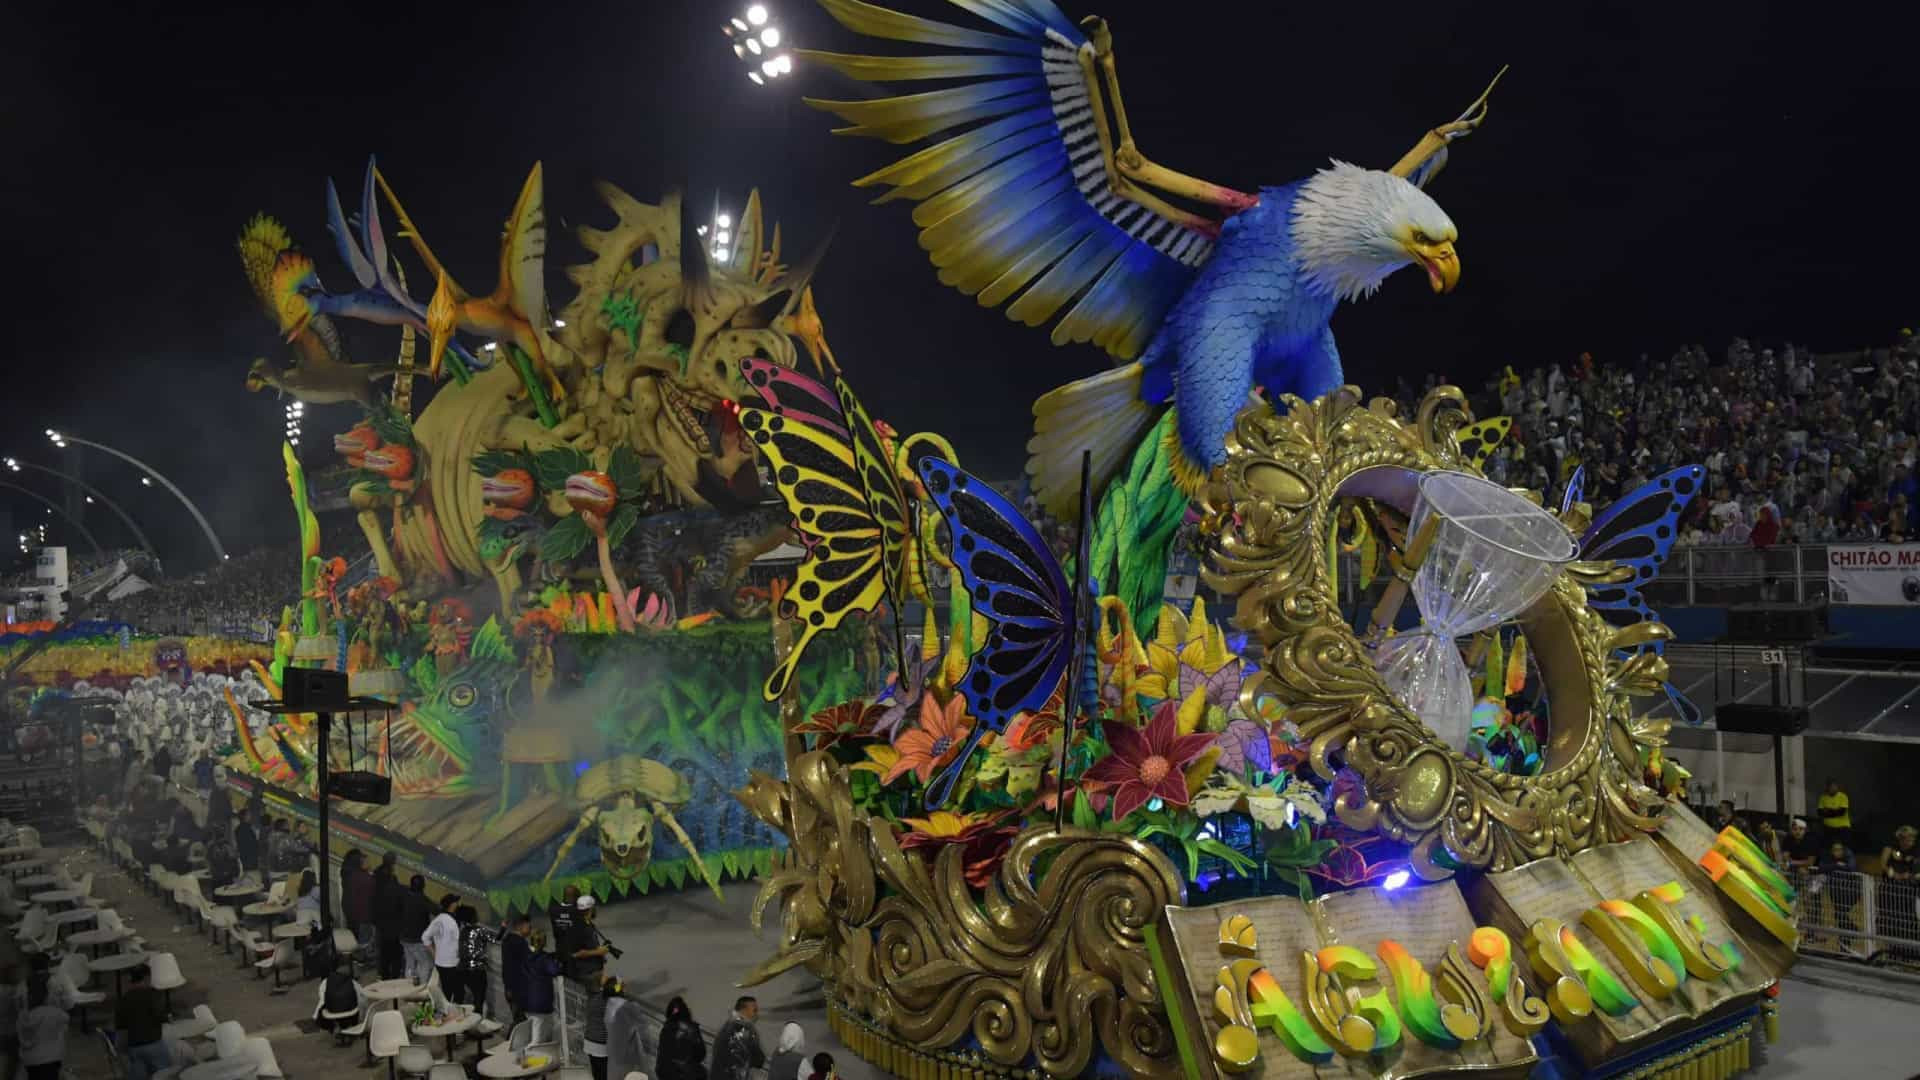 Carnaval de 2021 de SP é adiado por conta da covid-19